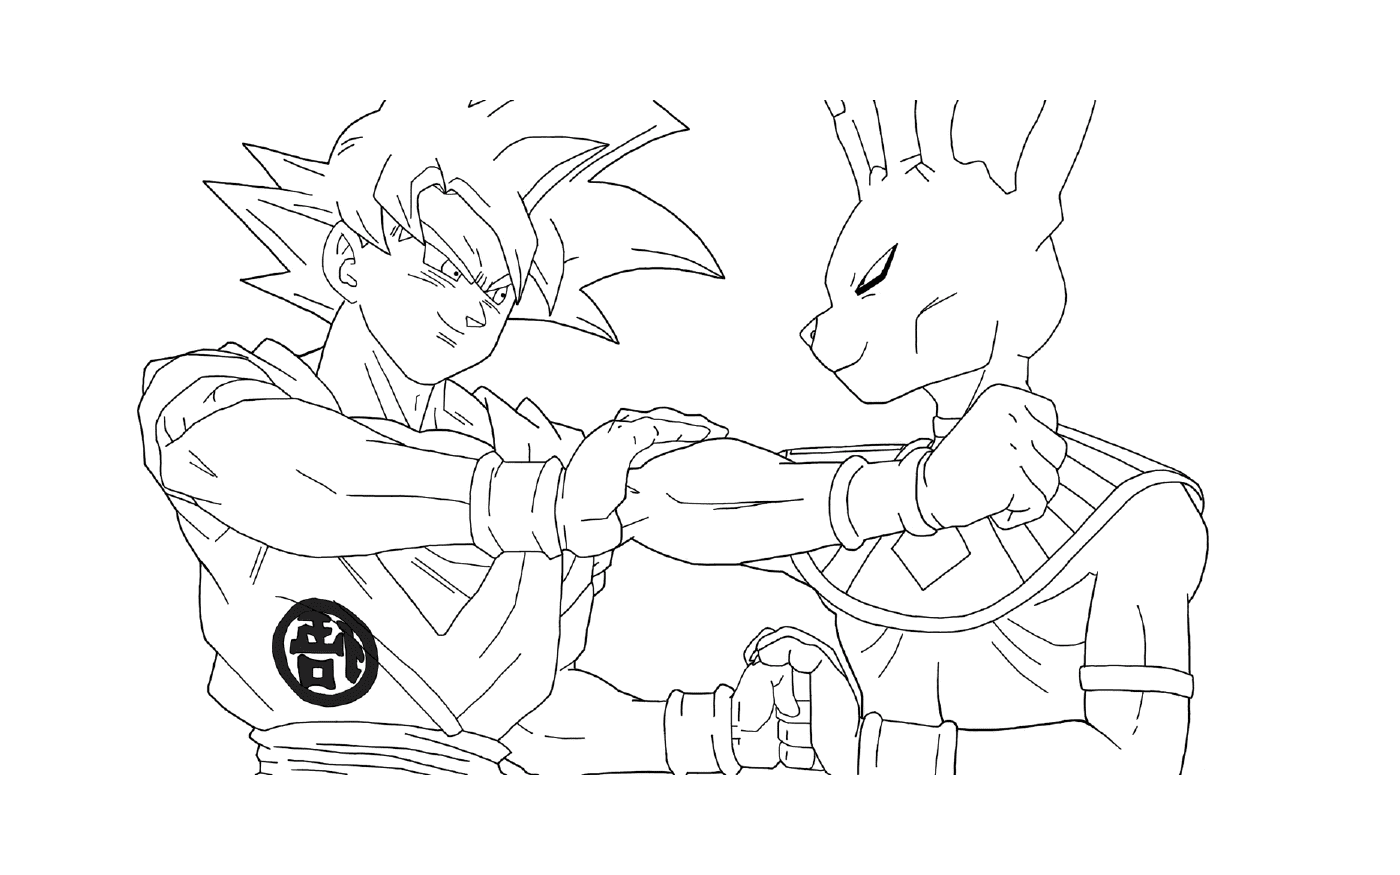   Beerus contre Goku Super Saiyan Gold de DBZ 